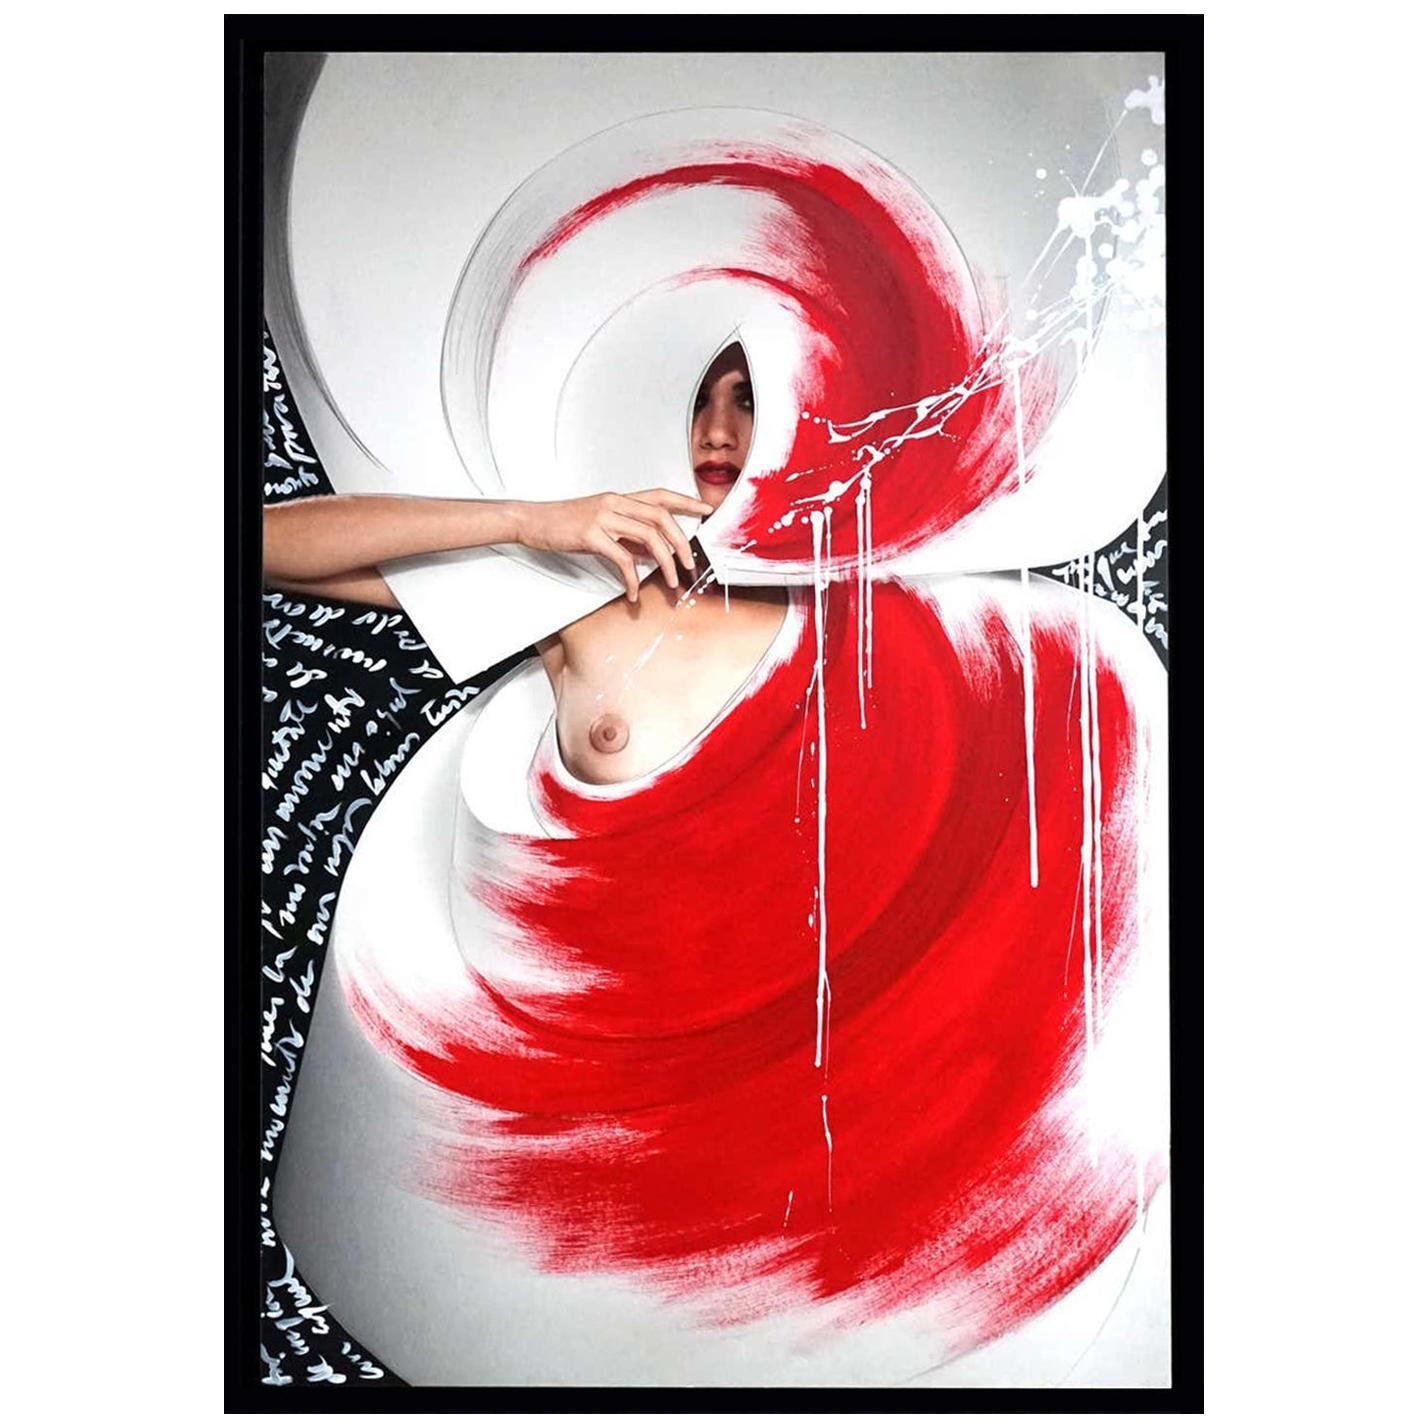 Efren Isaza Nude Painting – Farb Origami Spiral I, Intervenierte Fotografie auf Aluminium montiert